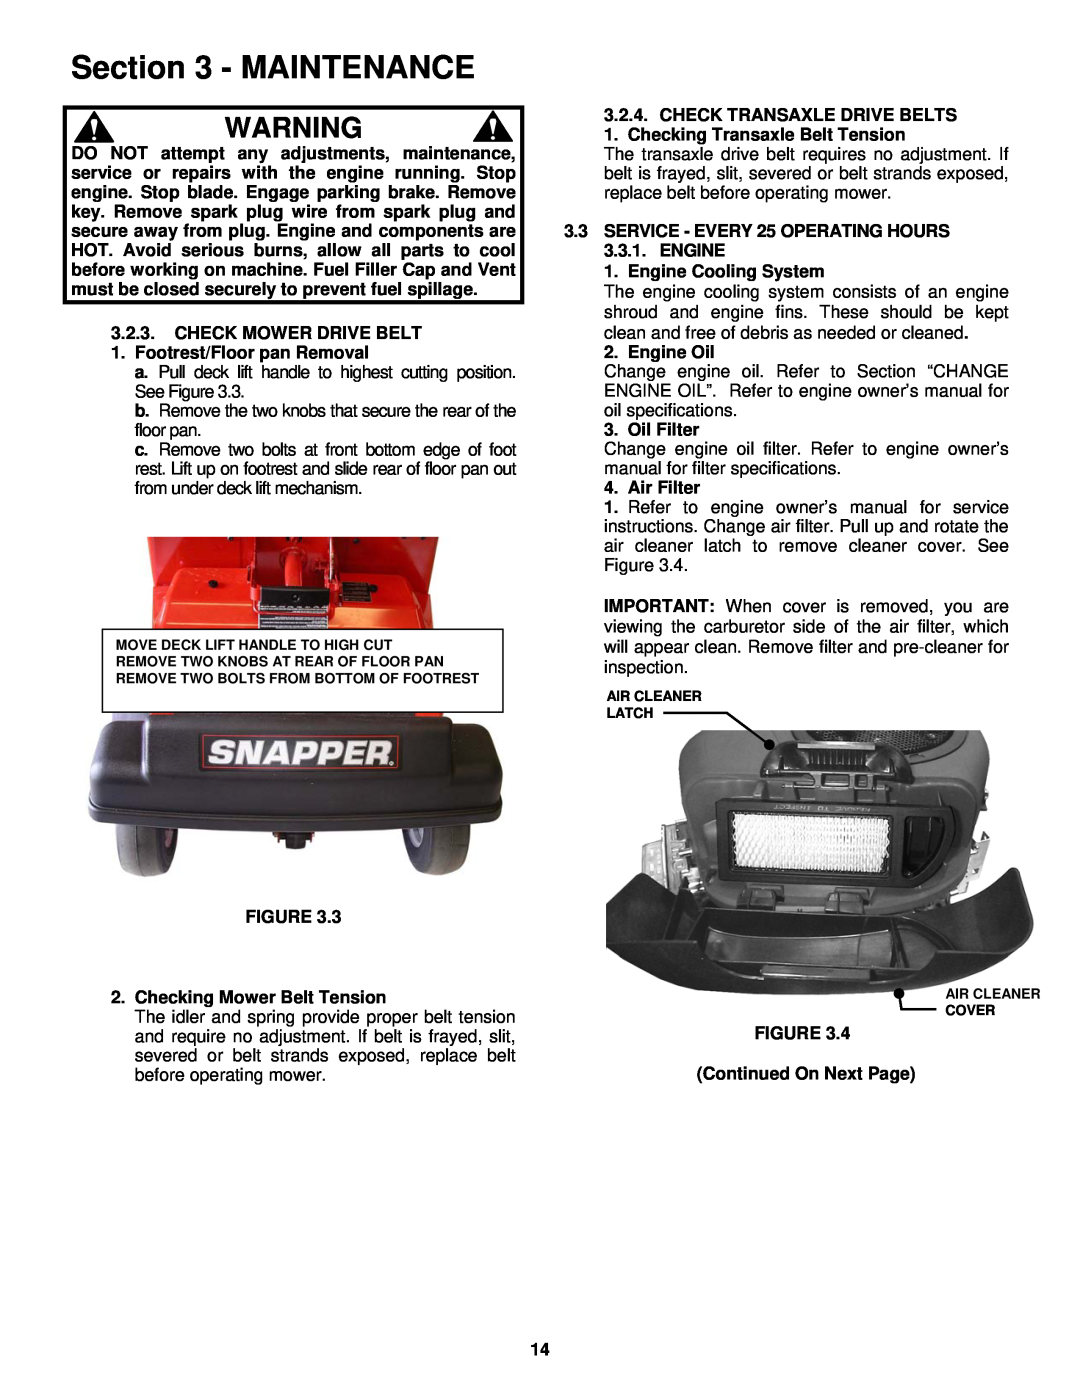 Snapper SZT18386BVE, SZT18336BVE important safety instructions Maintenance, Checking Mower Belt Tension 